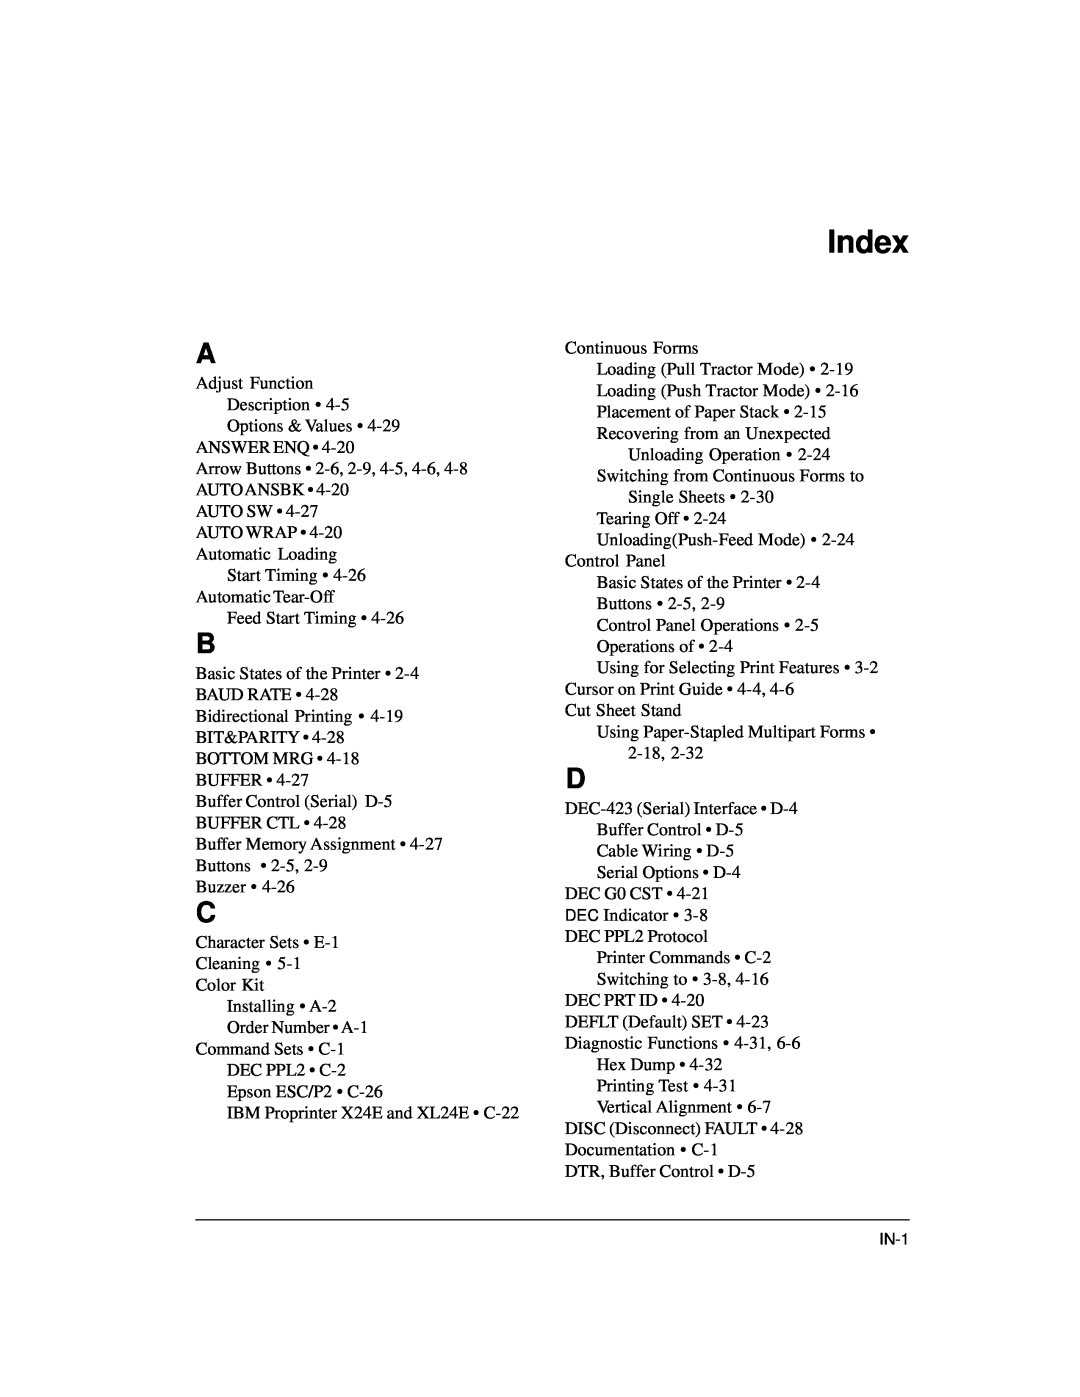 Genicom LA36 manual Index 